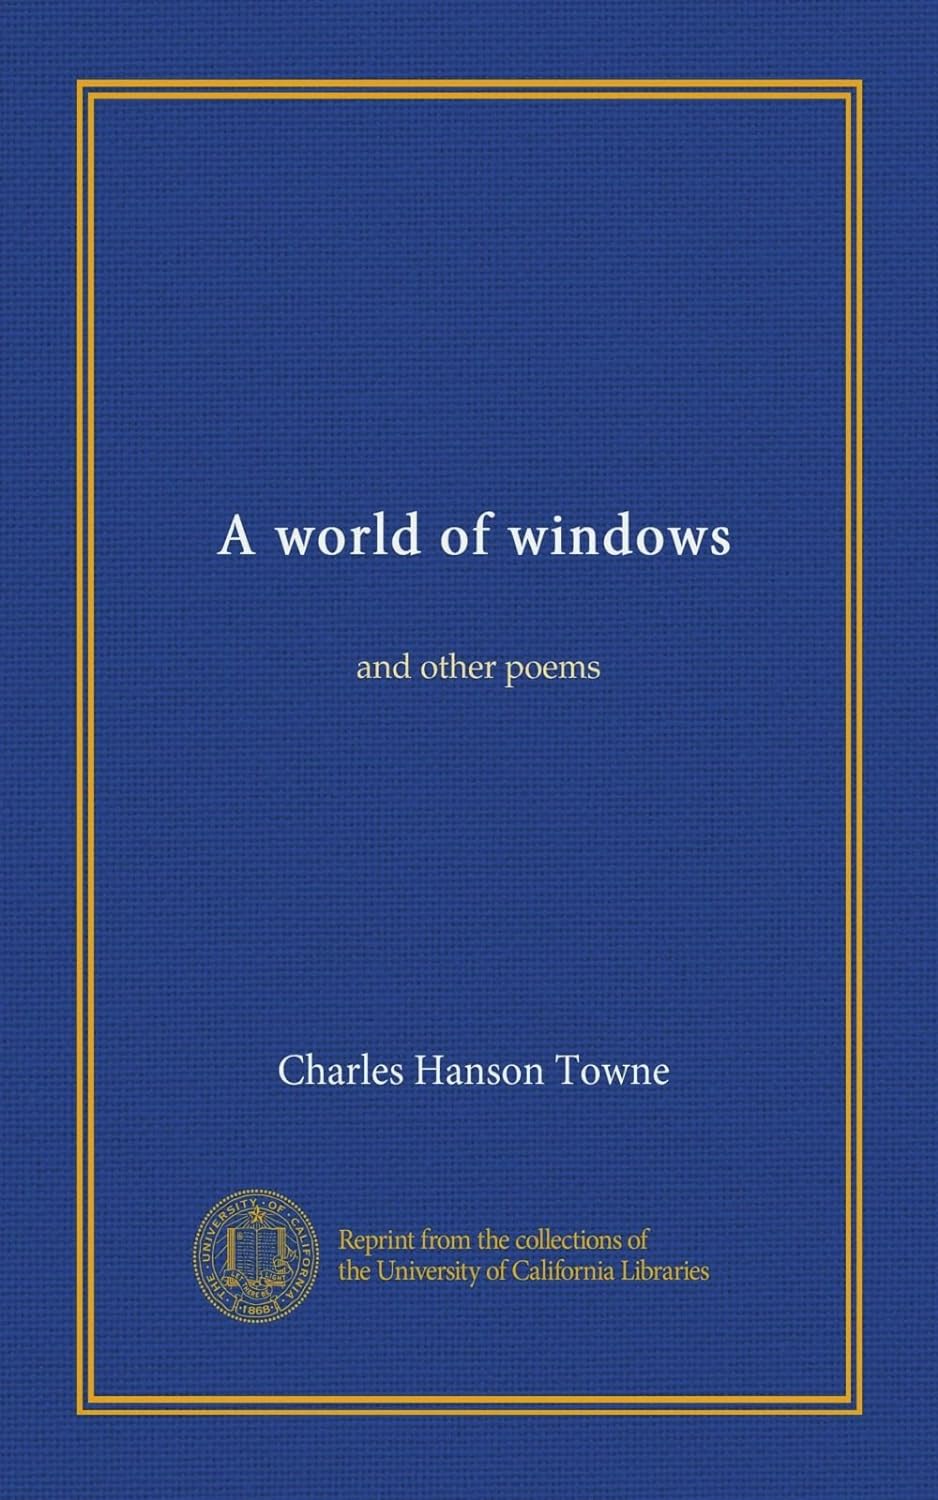 A world of windows